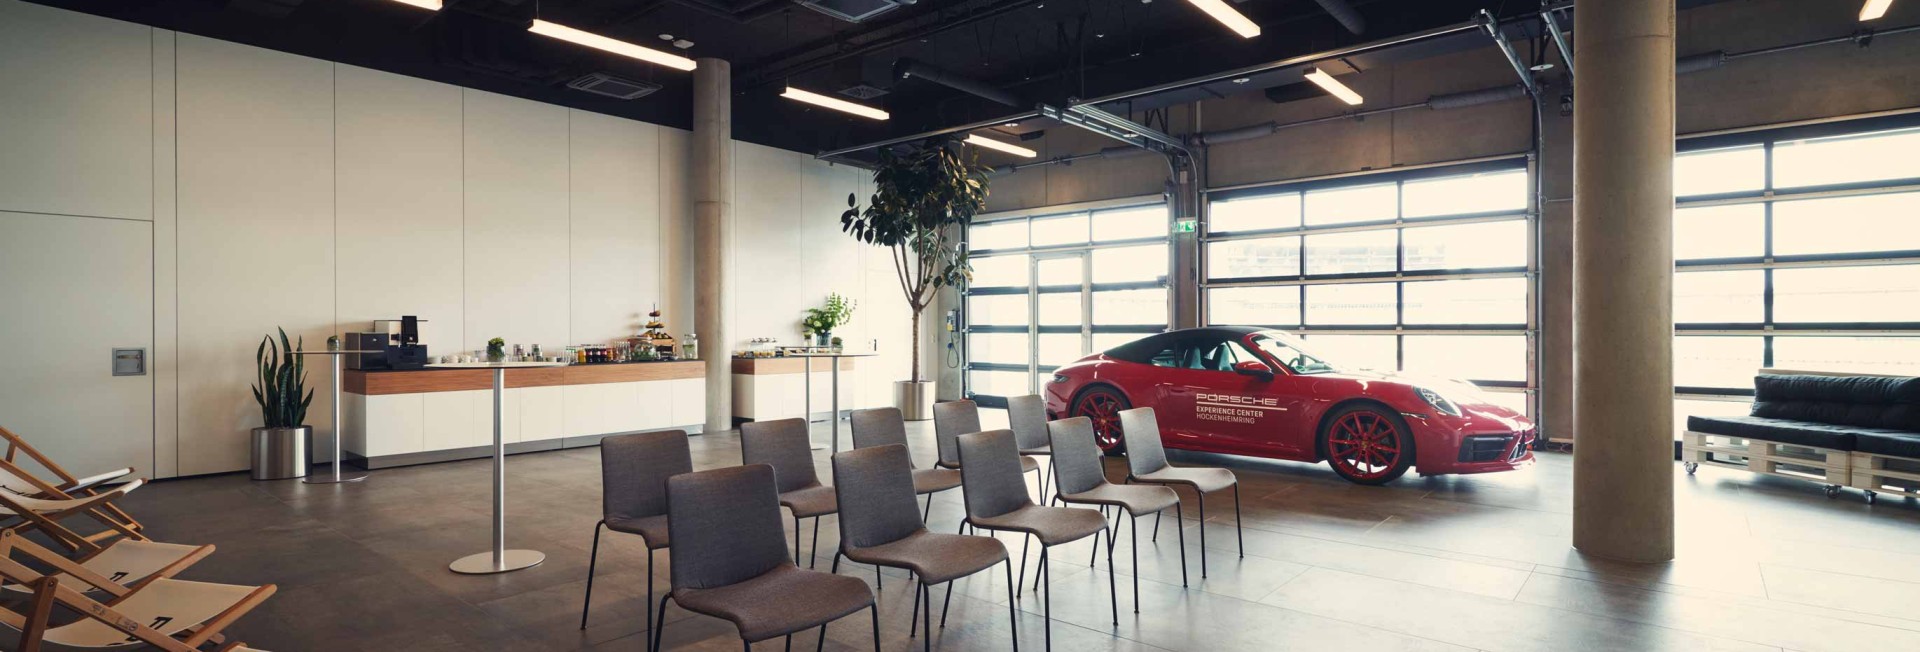 drive in motion Fahrertraining Porsche Experience Center Hockenheim